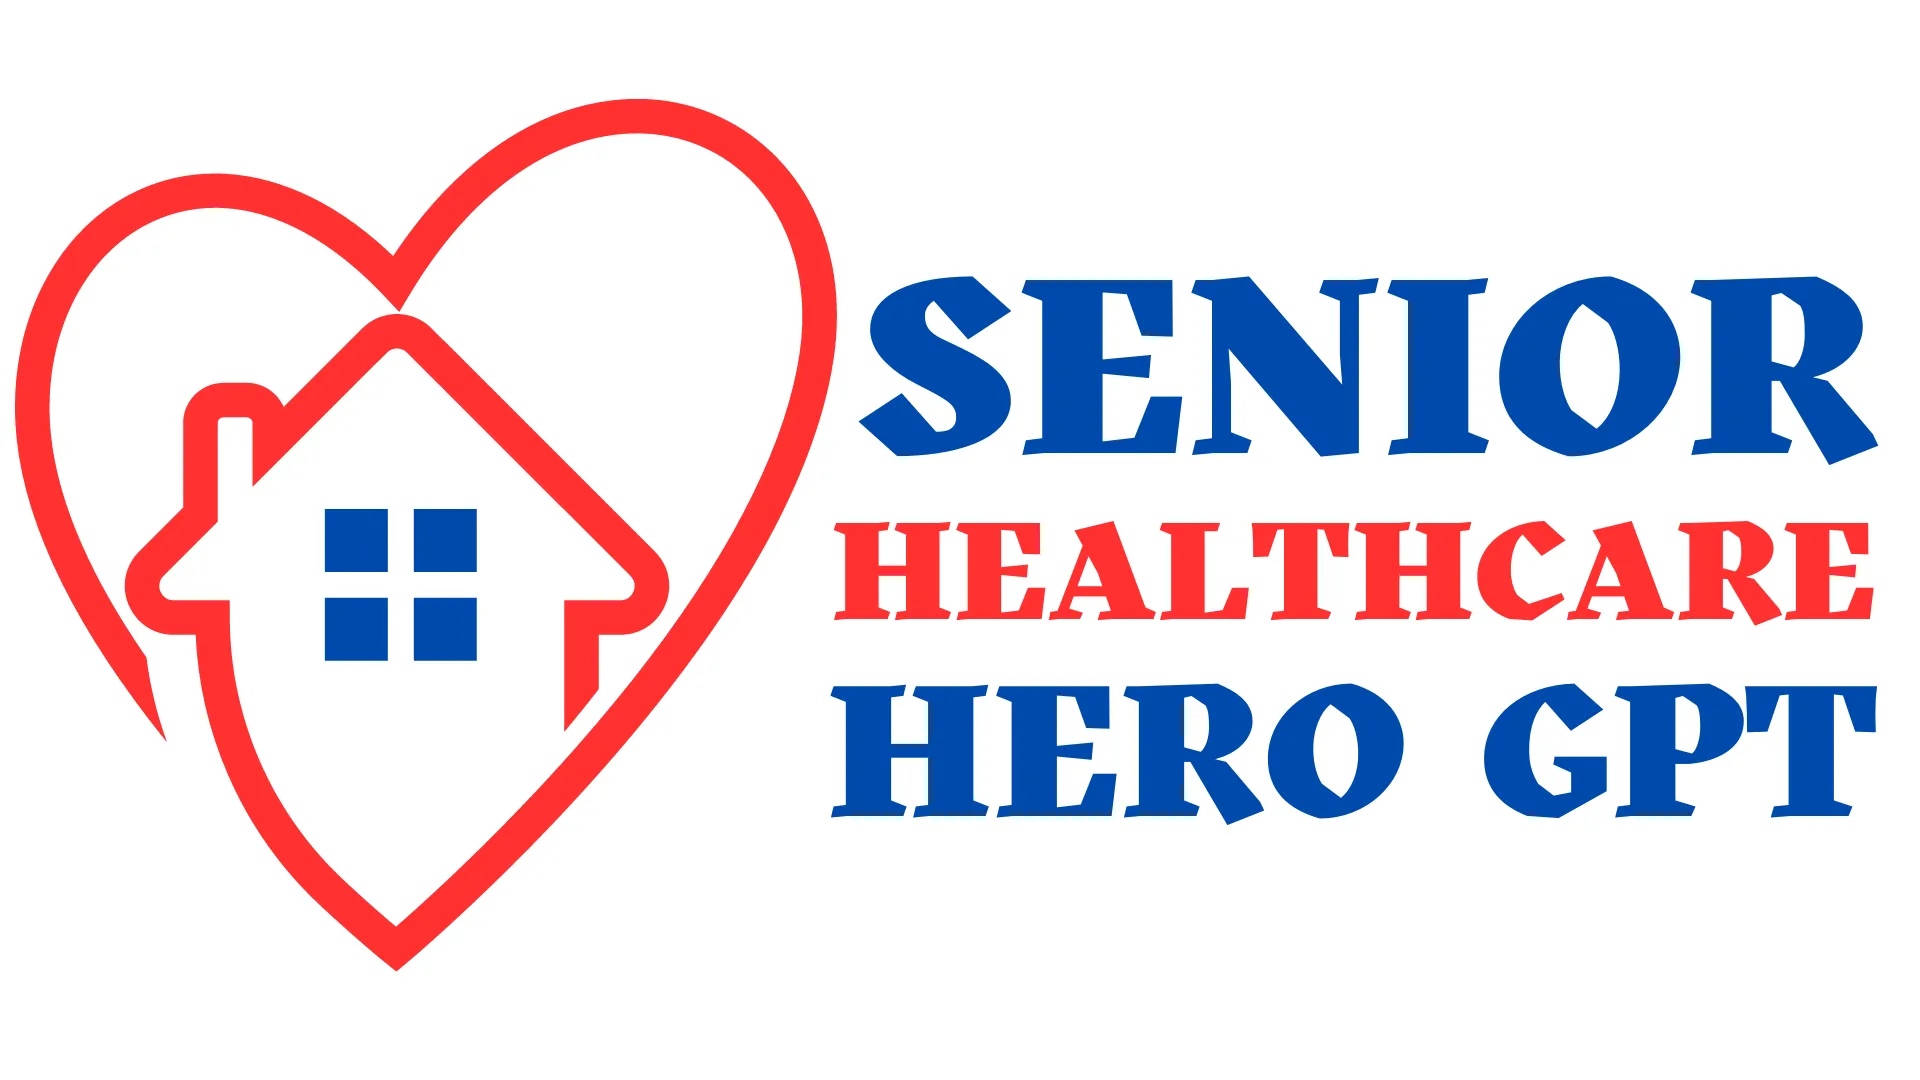 Senior Healthcare Hero GPT